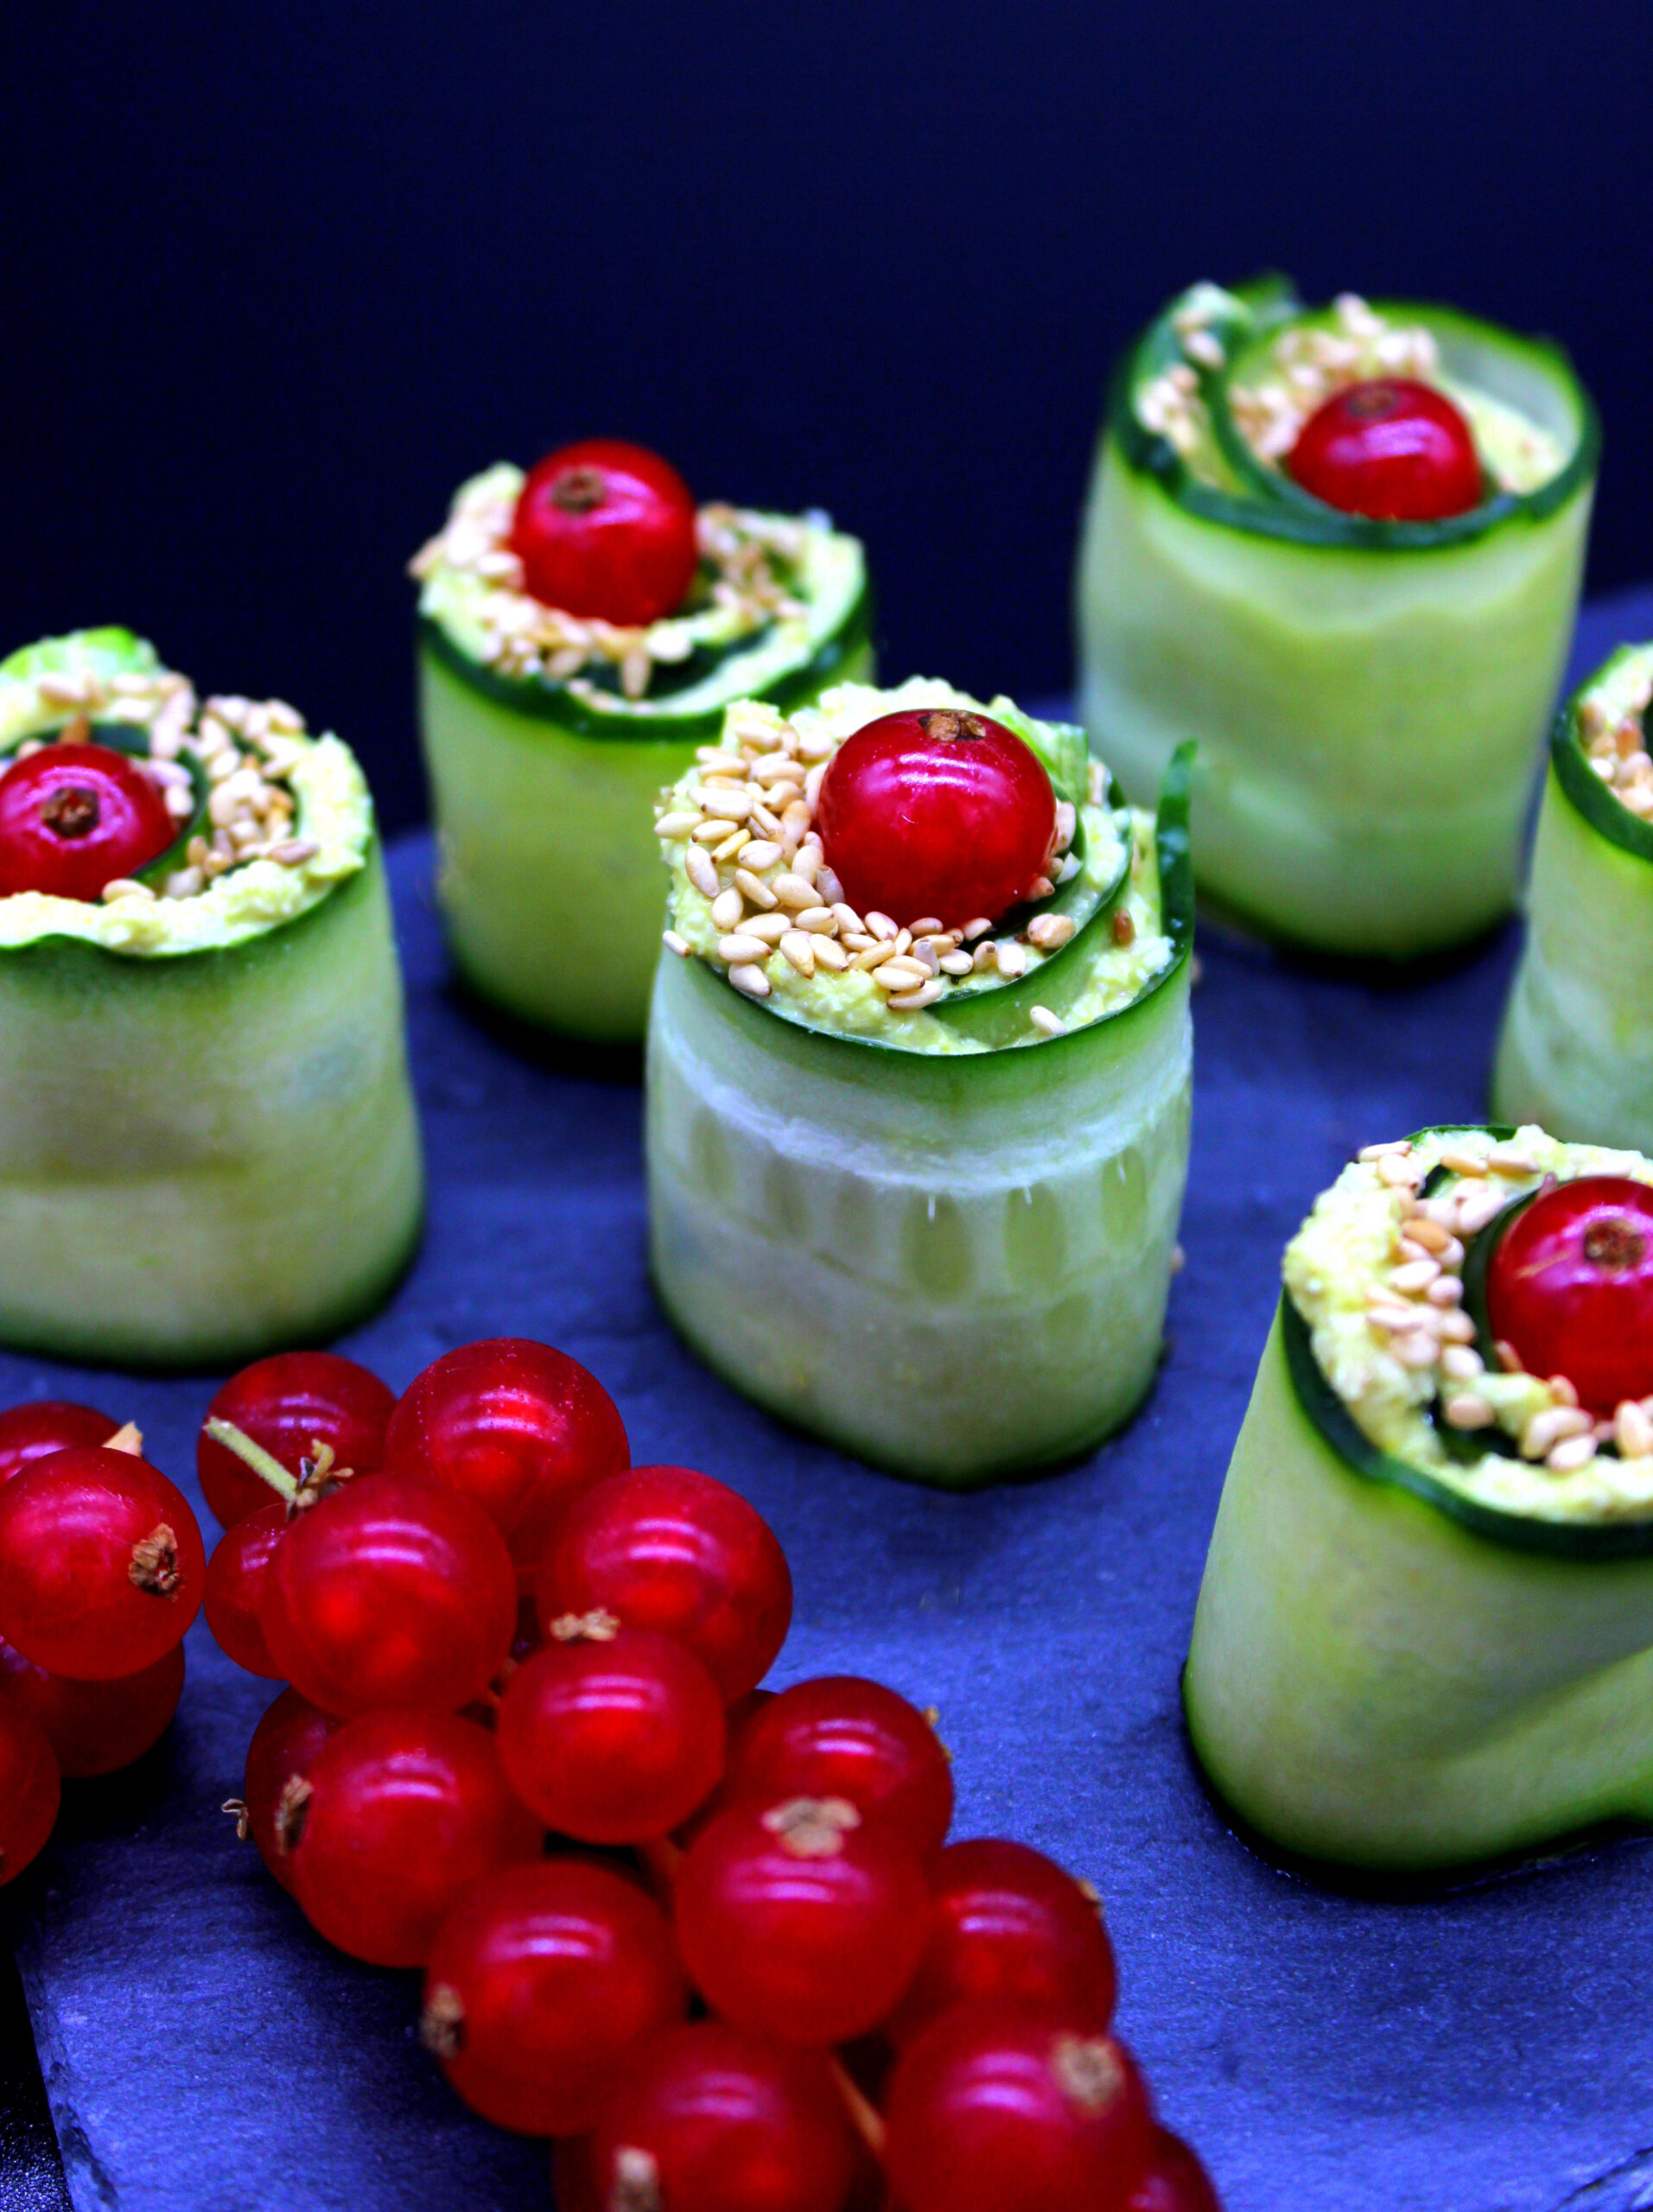 Fresh vegan cucumber rolls